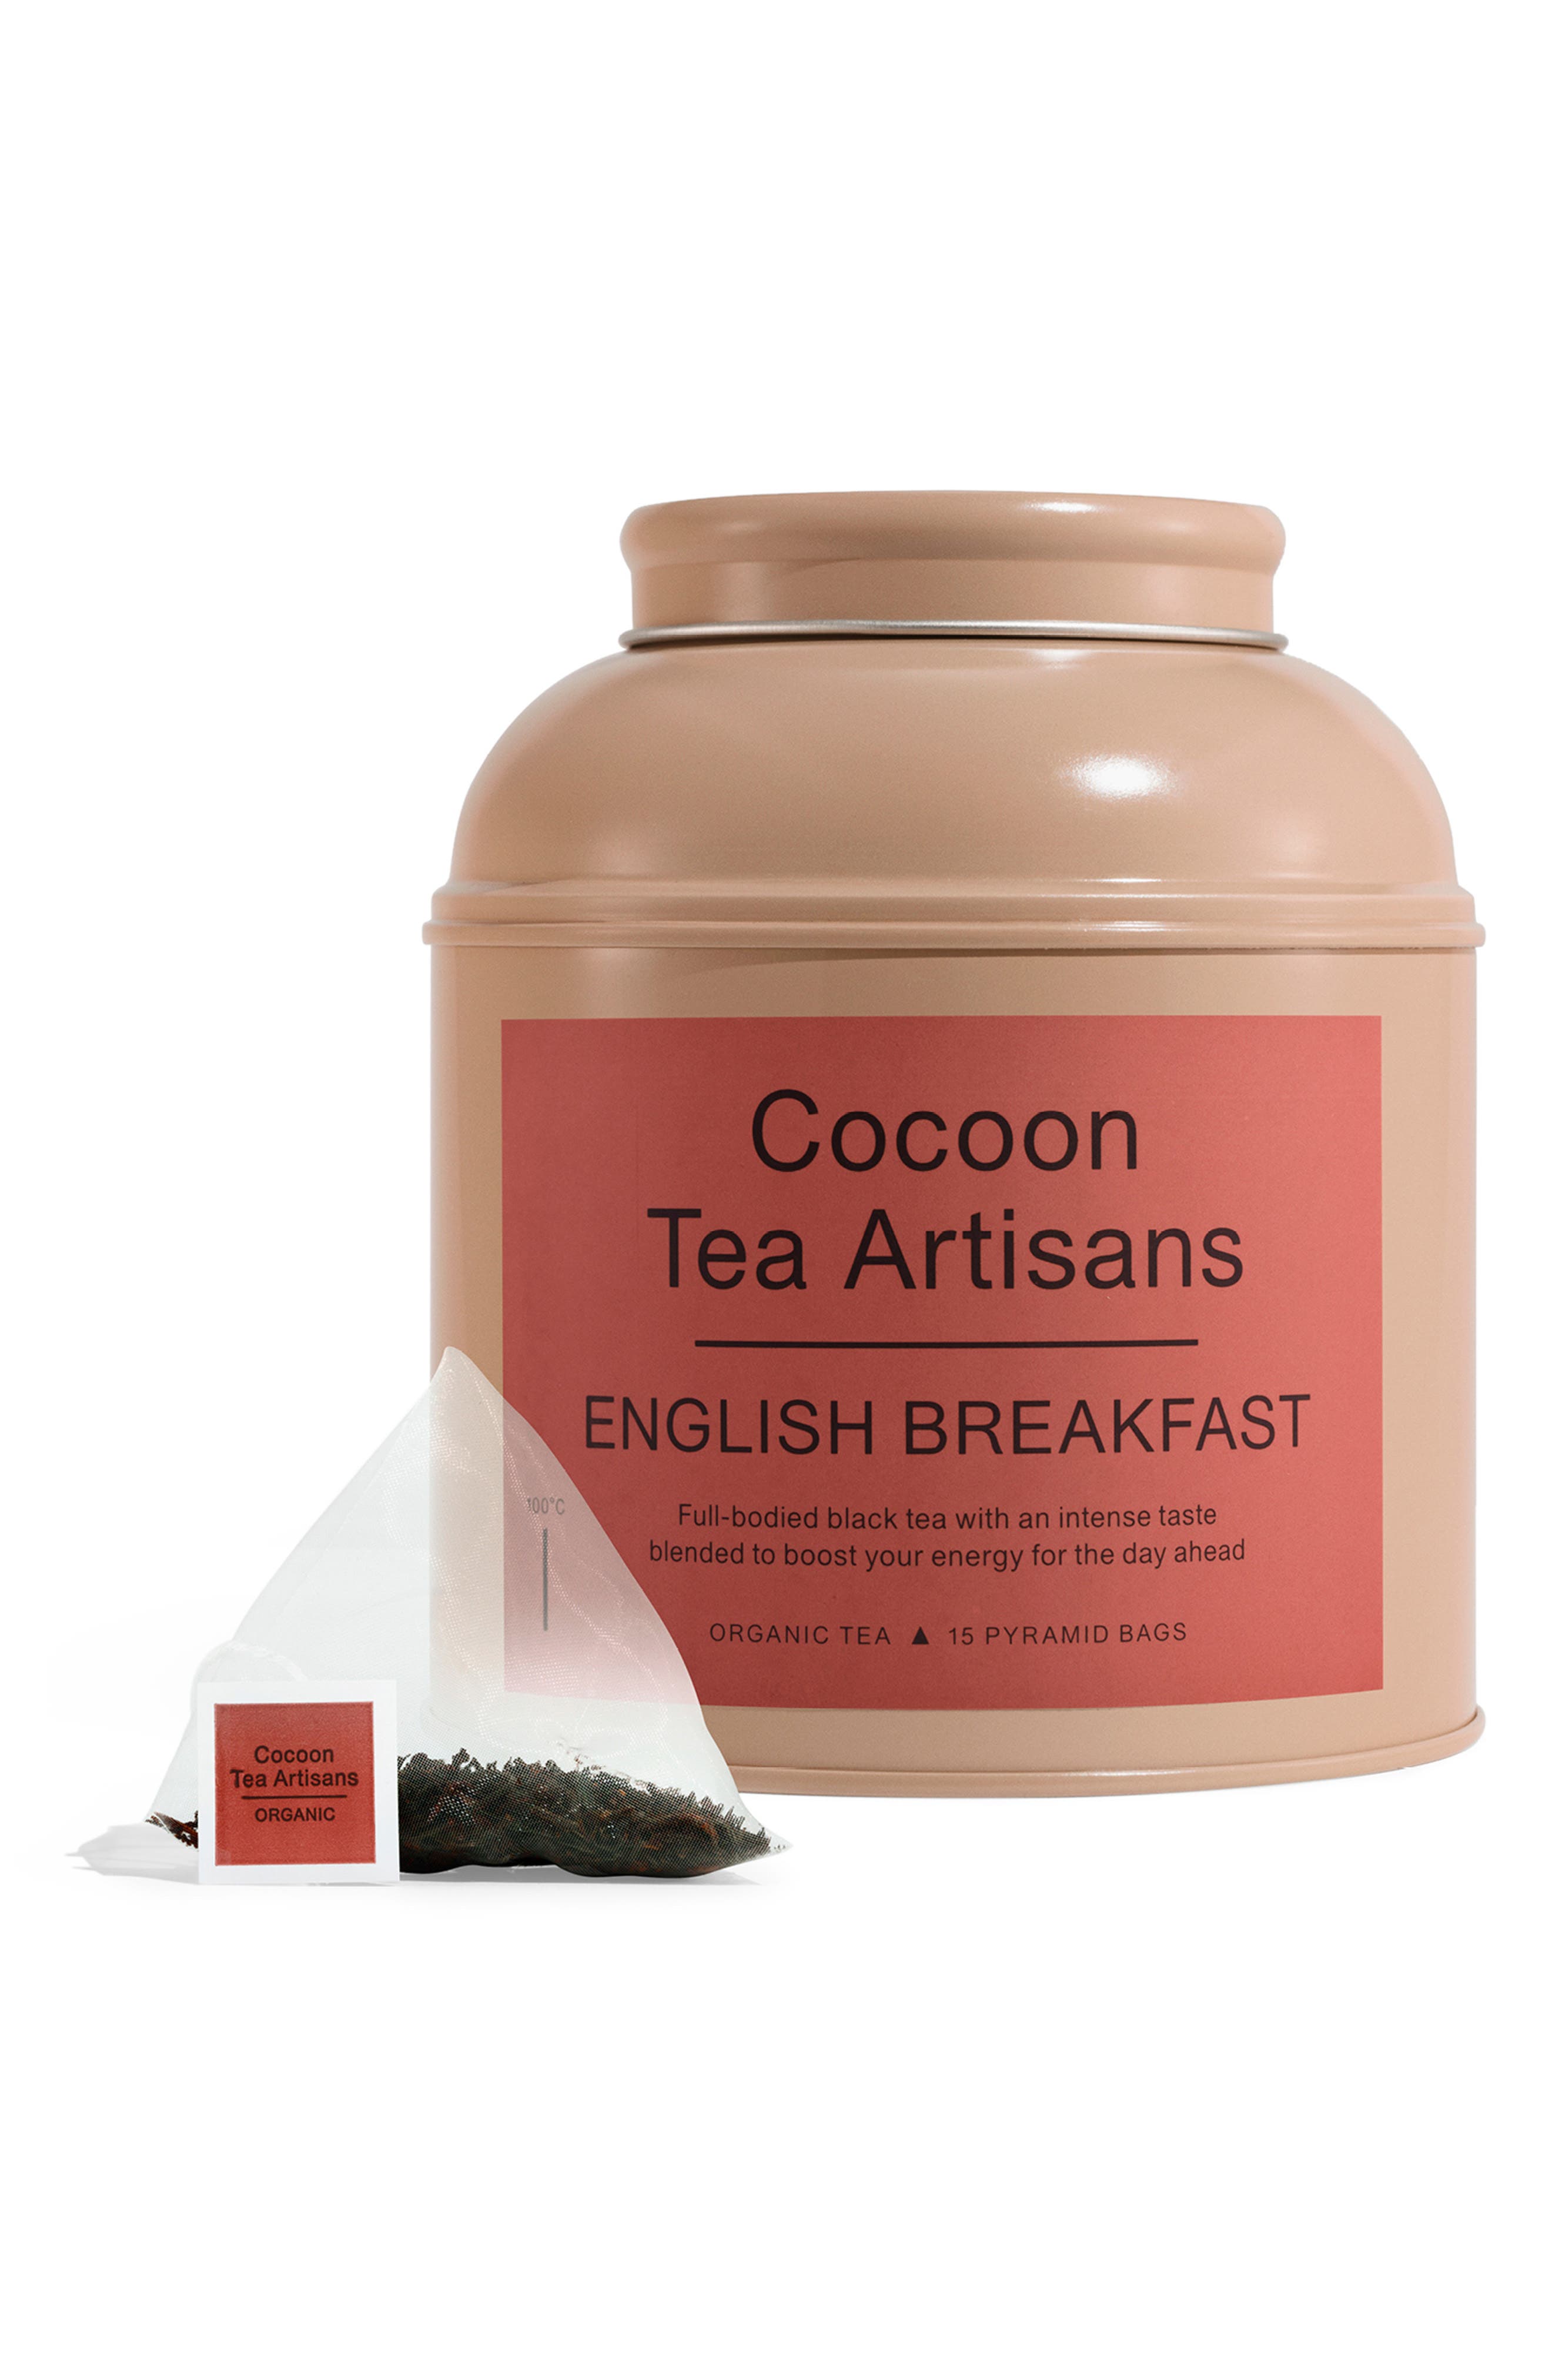 UPC 021000000067 product image for Cocoon Tea Artisans Organic English Breakfast Tea Big Tea Caddy | upcitemdb.com